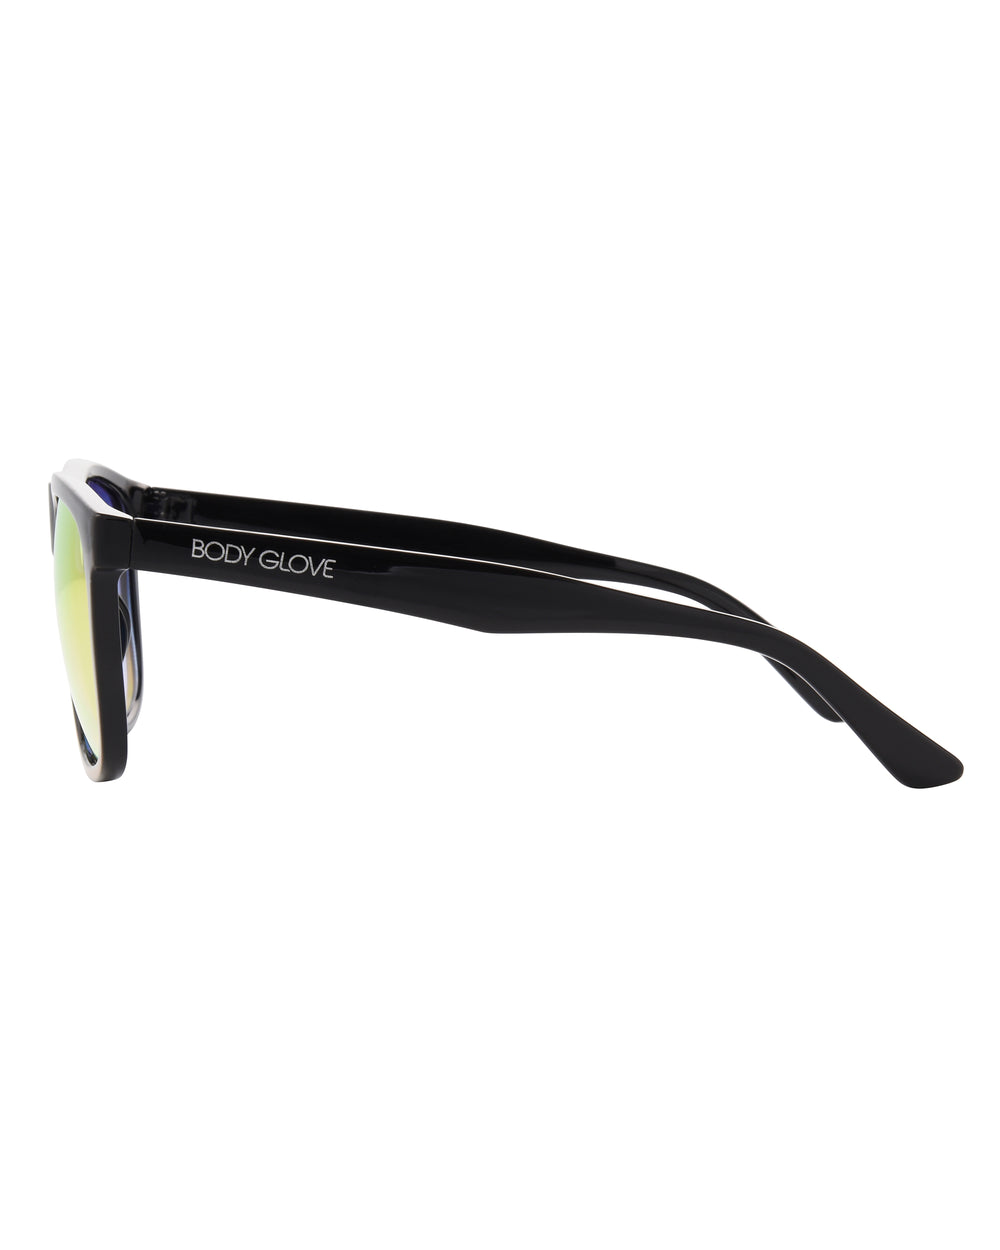 Talise Way-Style Frame Sunglasses - Black - Body Glove